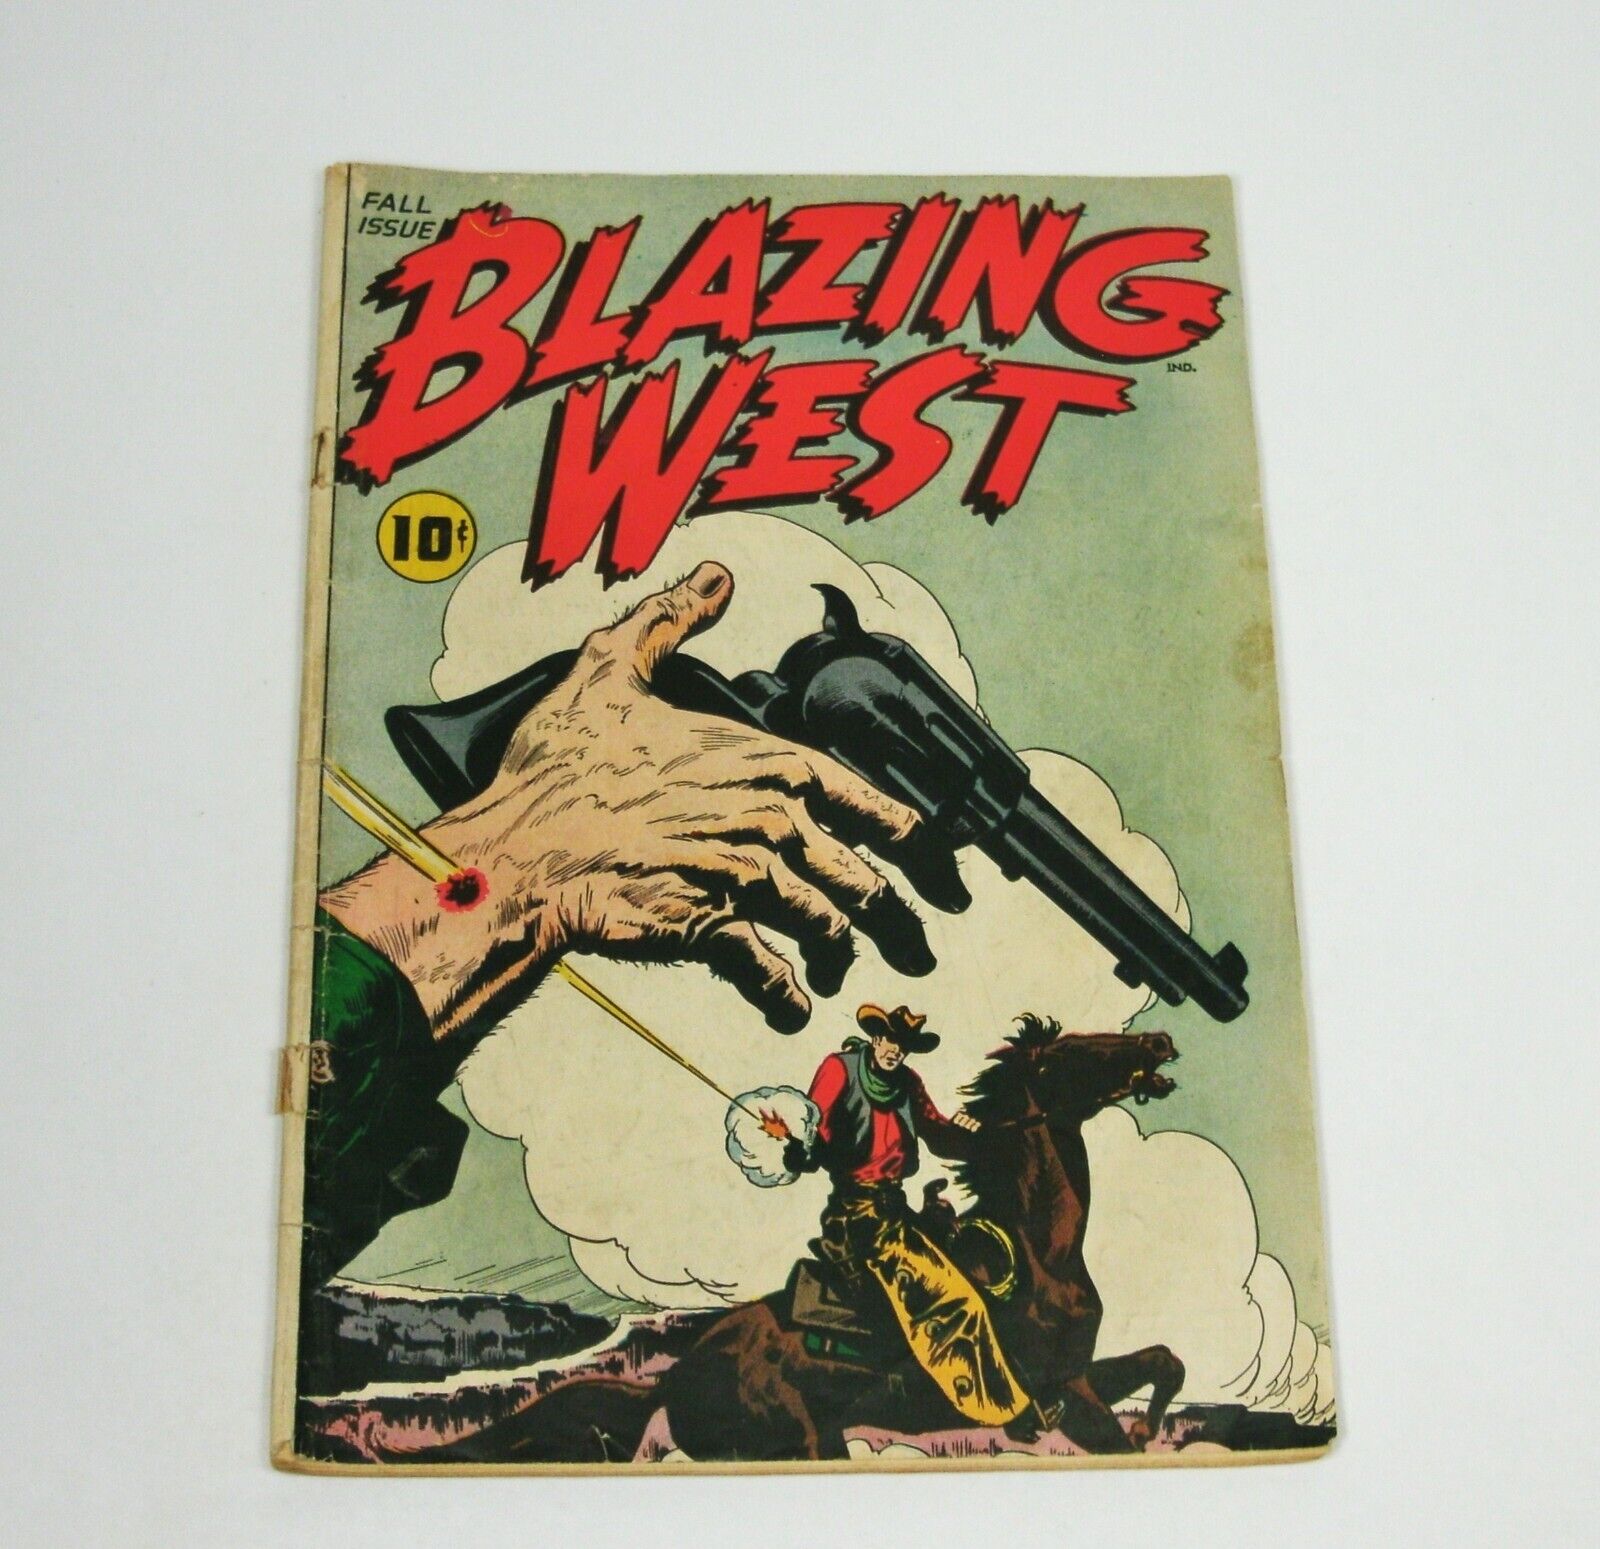 w Vtg Fall 1948 BLAZING WEST #1 COMIC BOOK Western Cowboys American Comics Group